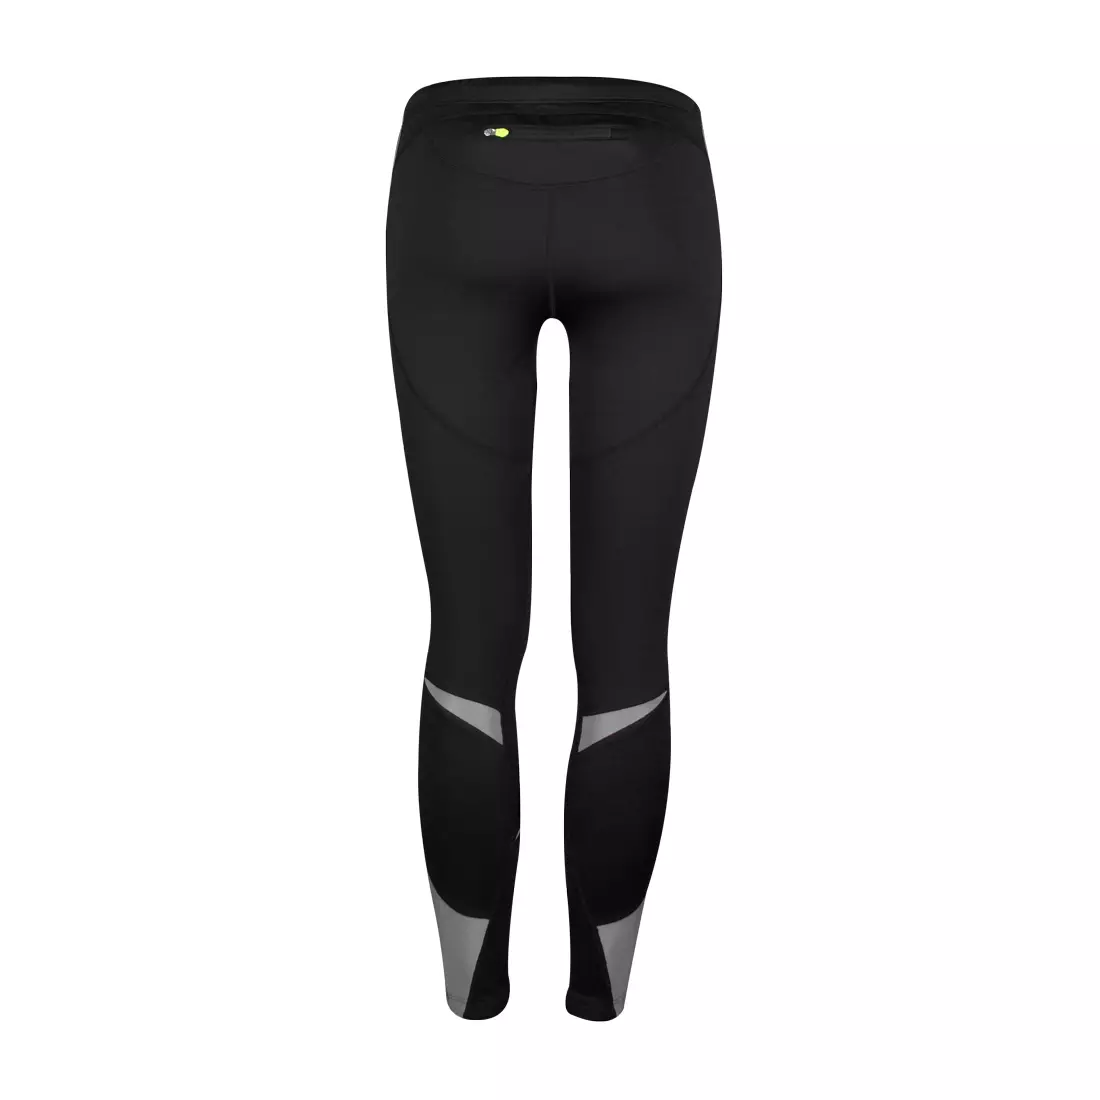 NEWLINE VISIO TIGHTS 14116-060 - pánské běžecké kalhoty - barva: Black-fluor